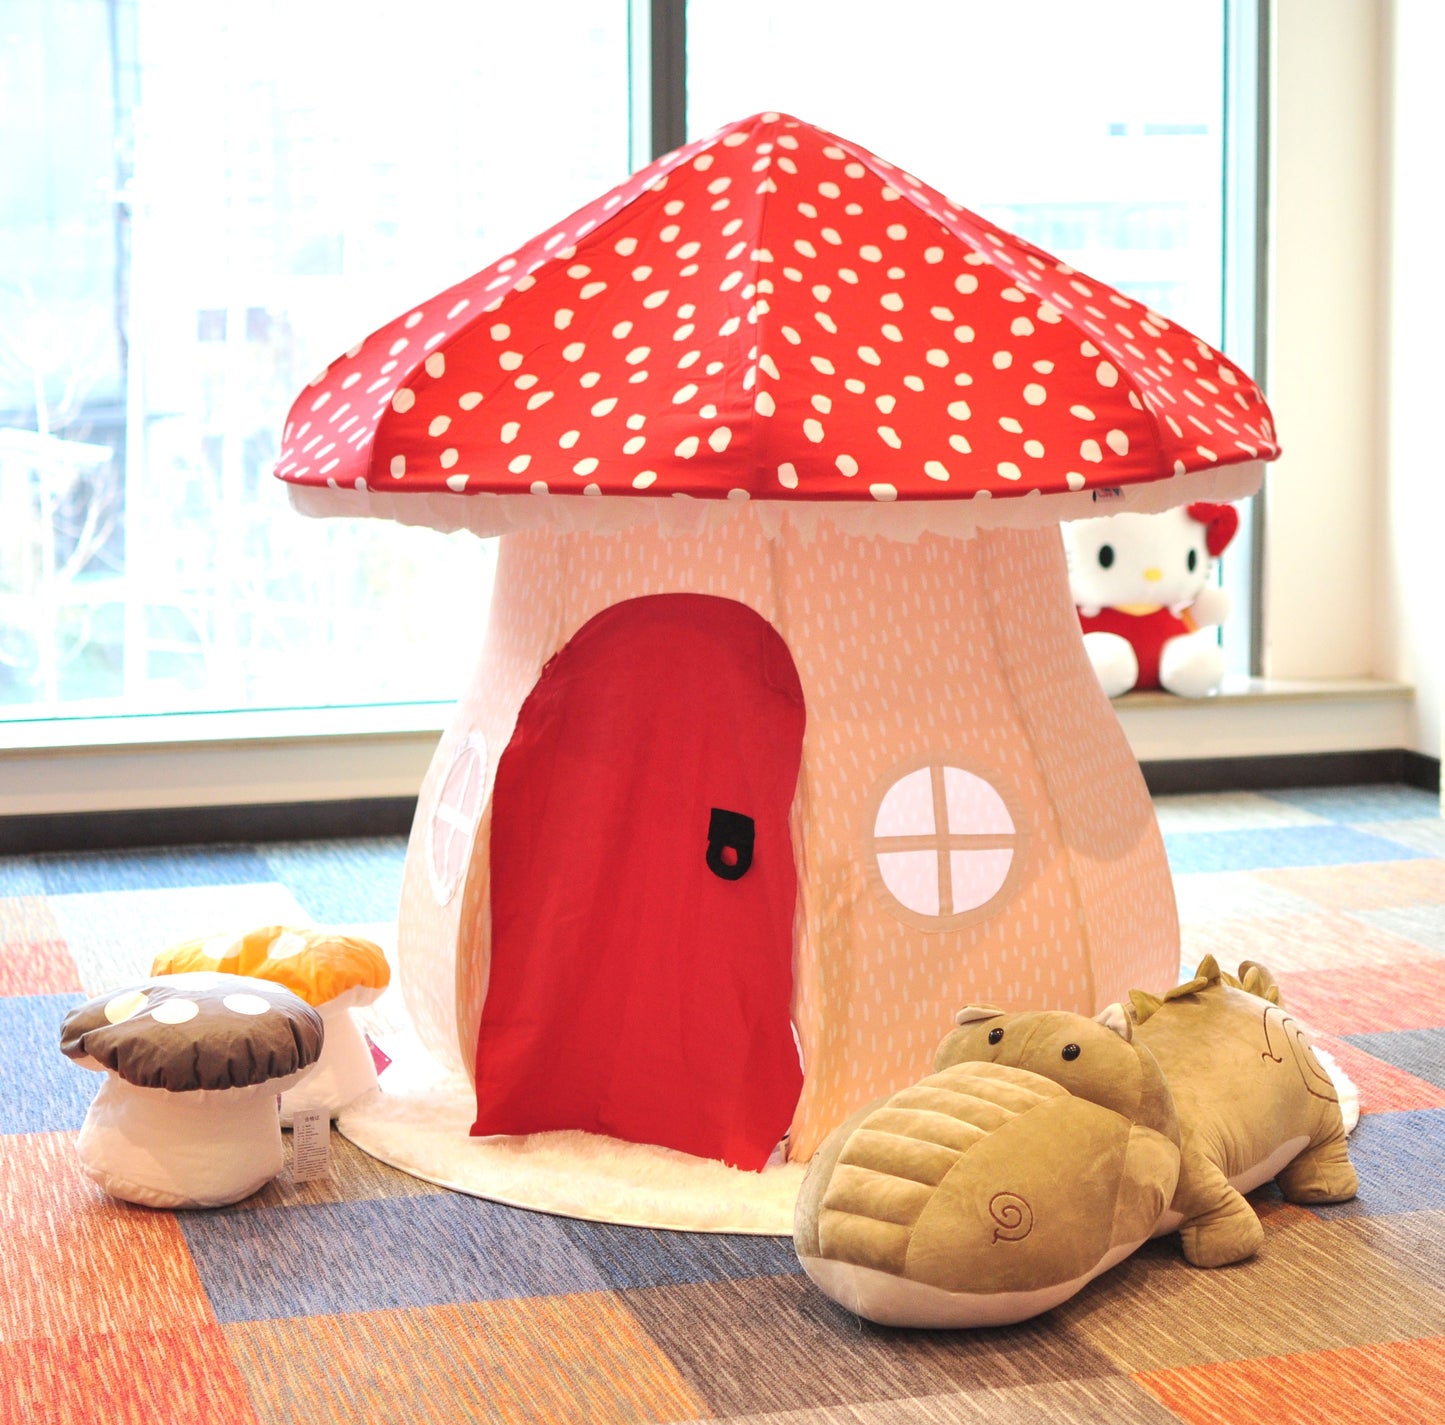 Asweets Kids Play Tent Mushroom Playhouse